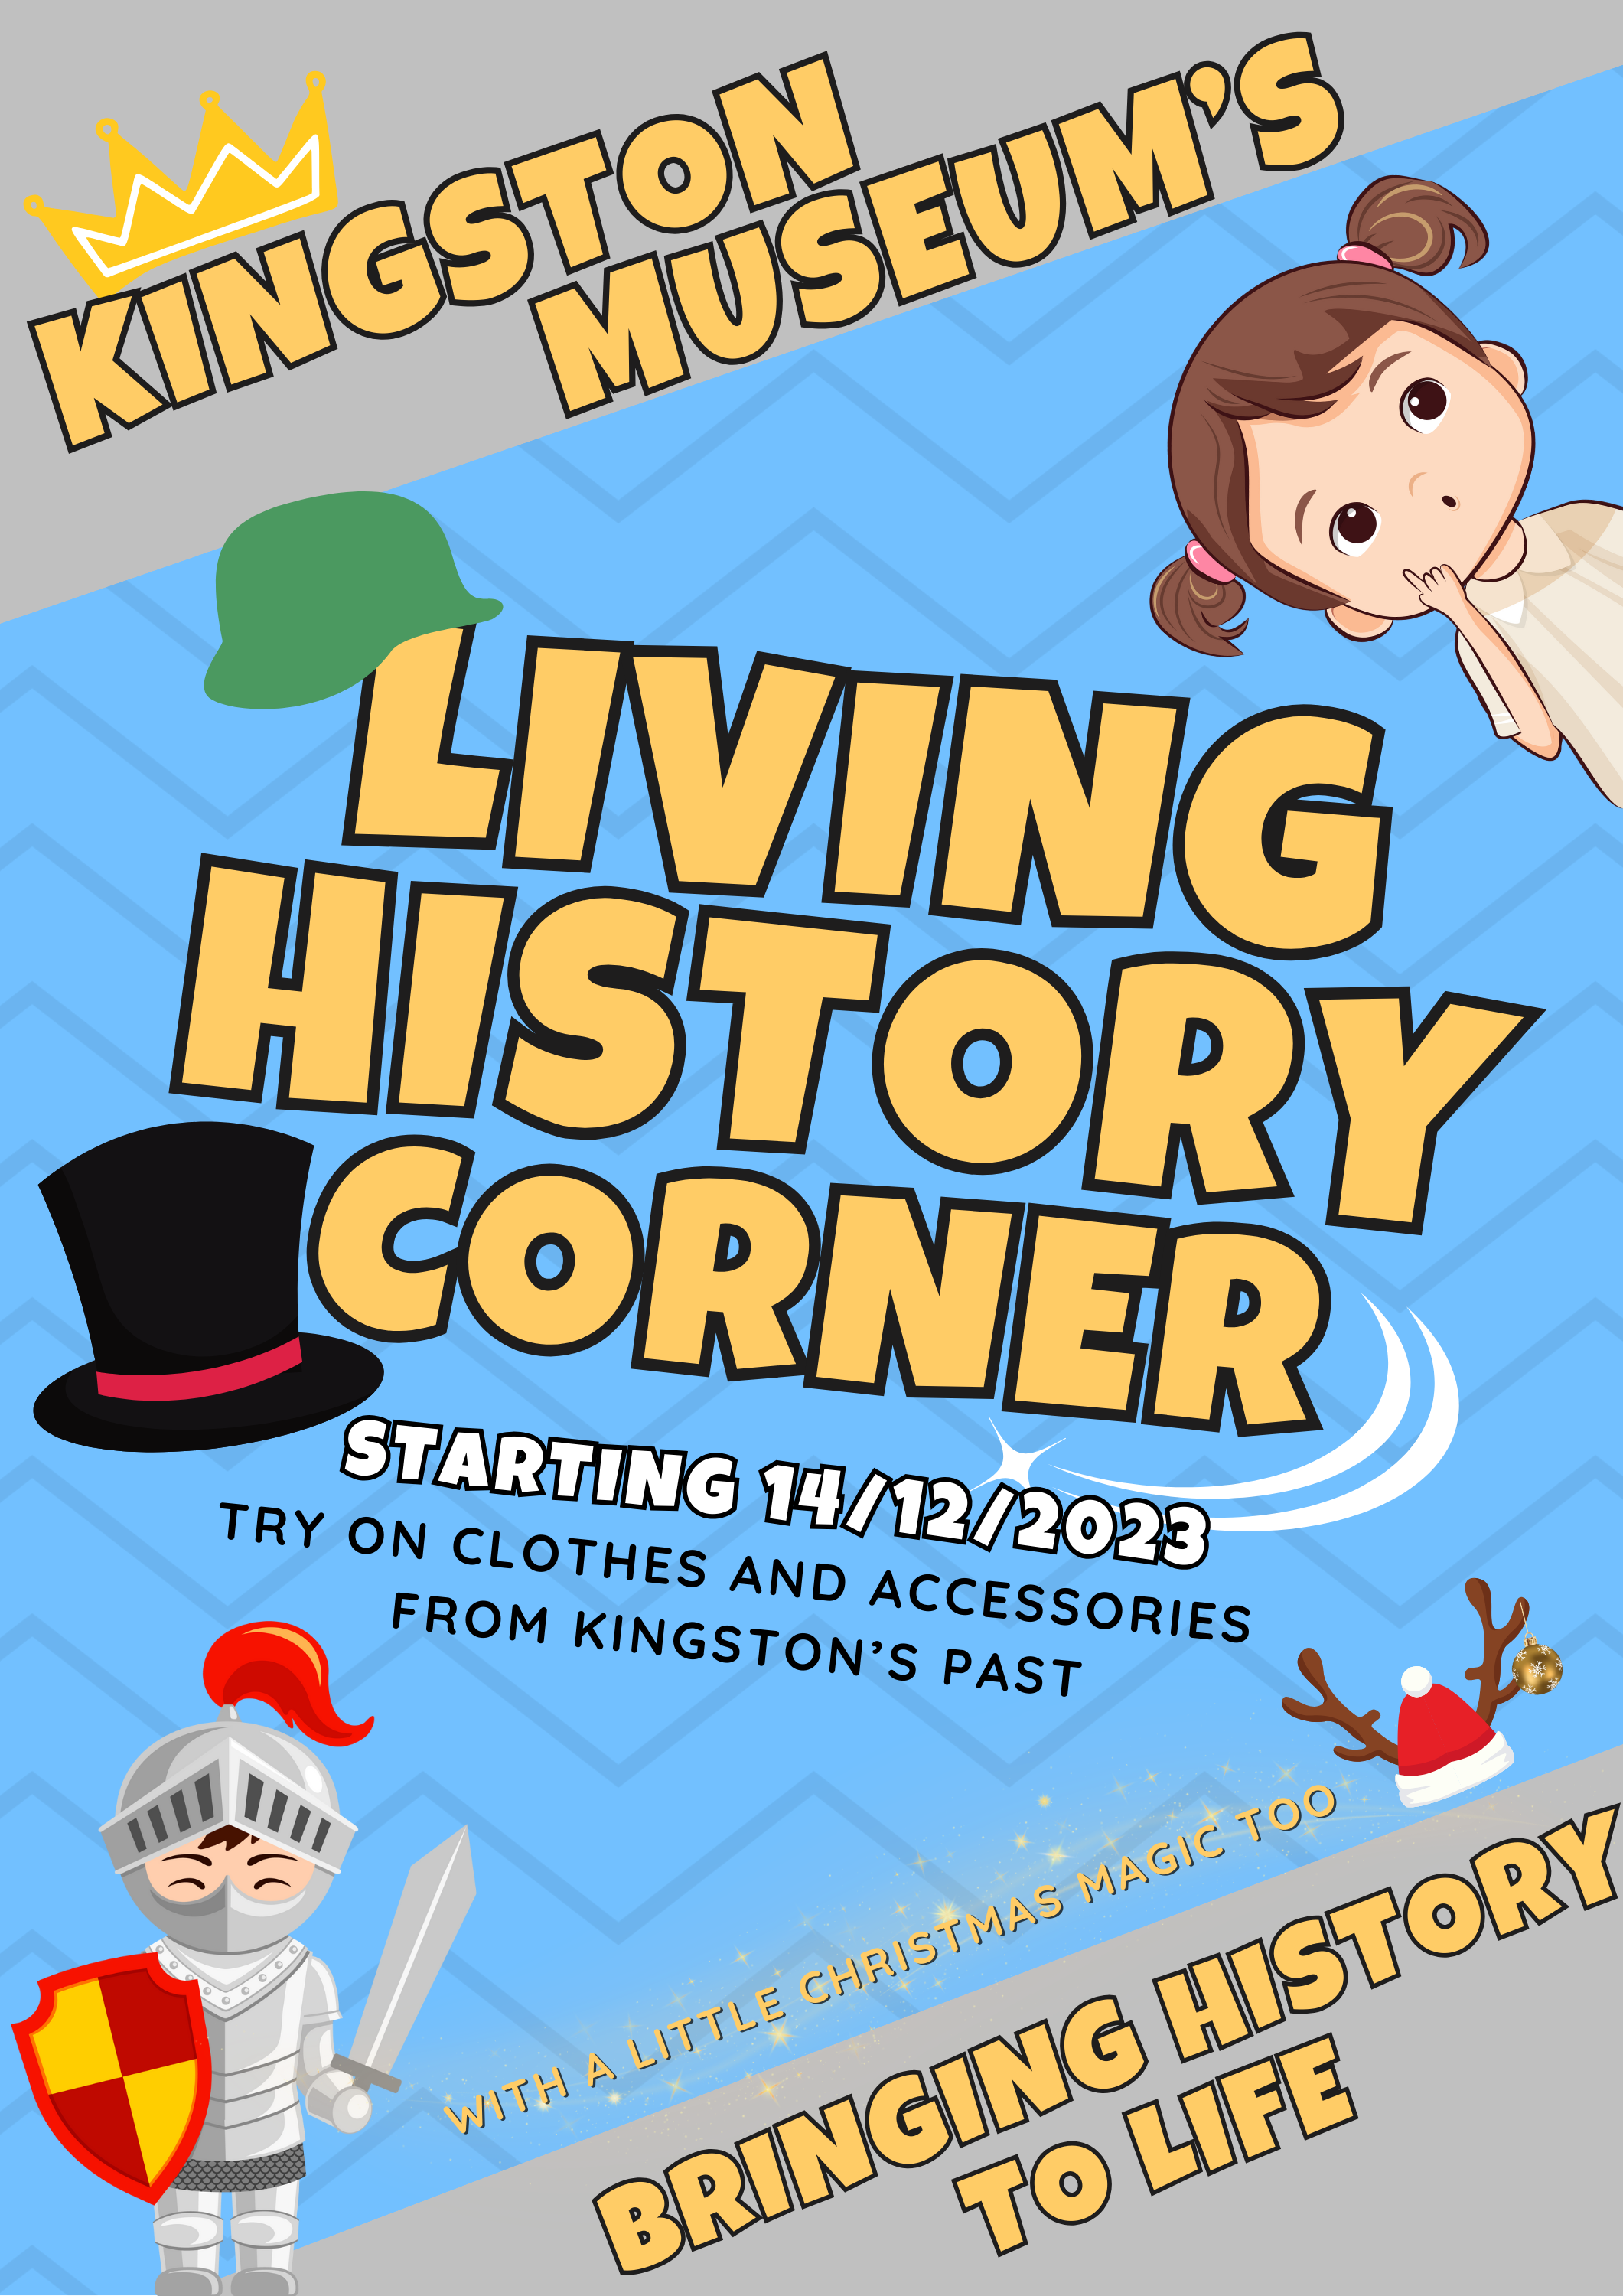 Living History Corner at Kingston Museum